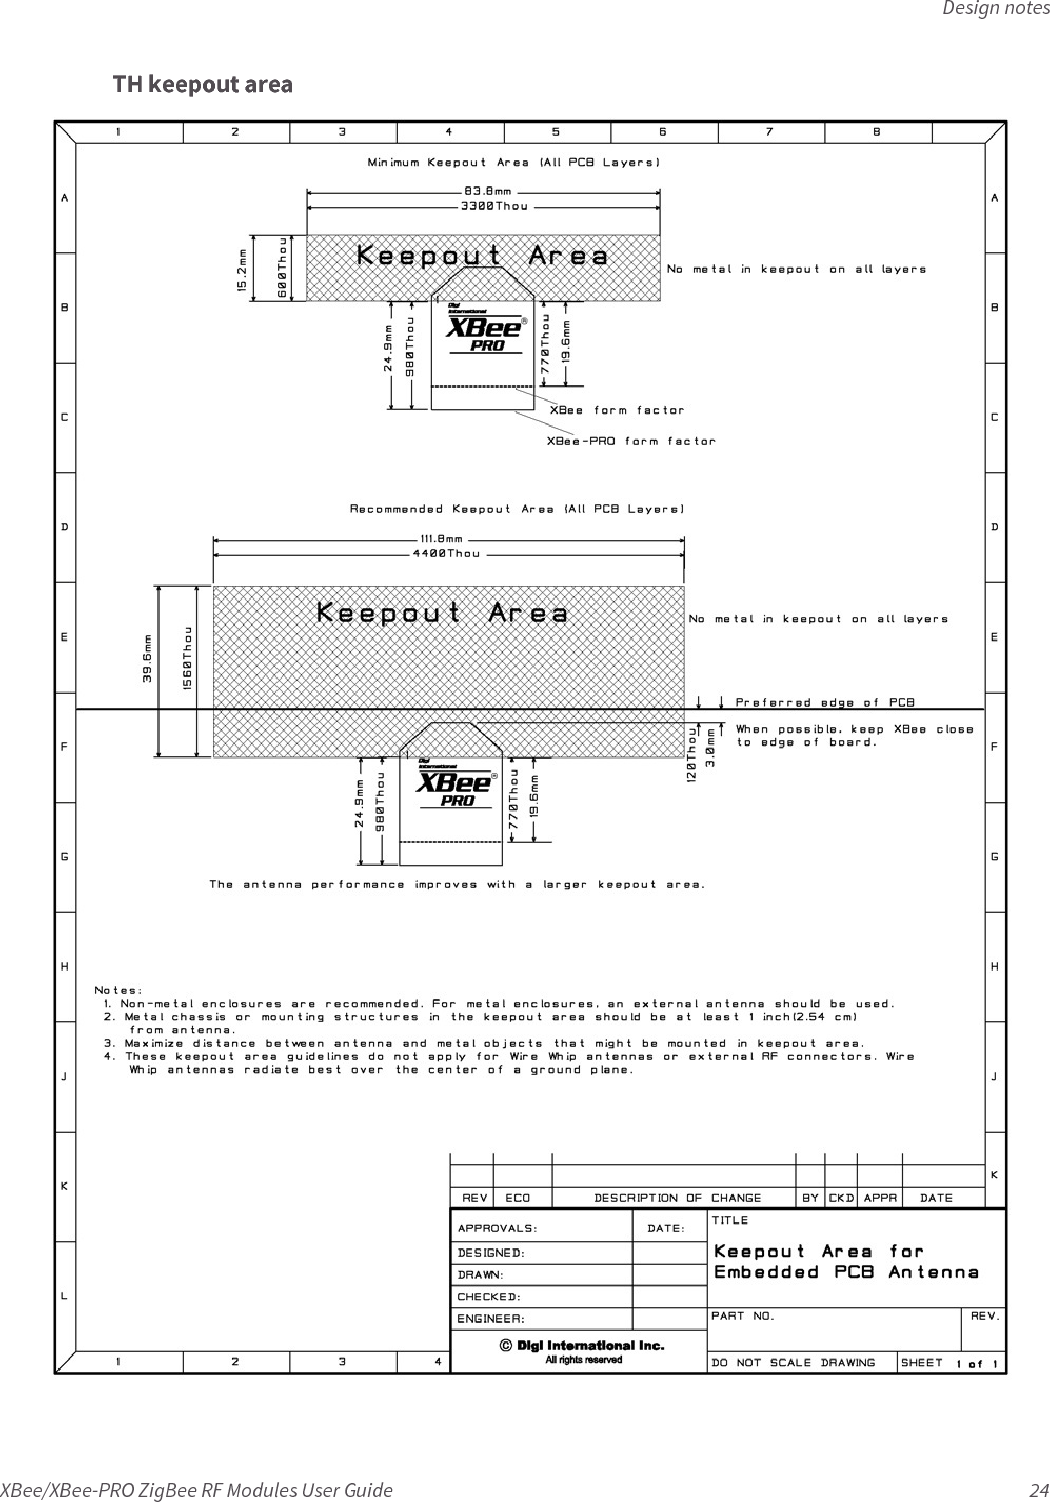 Design notesXBee/XBee-PRO ZigBee RF Modules User Guide 24TH keepout area